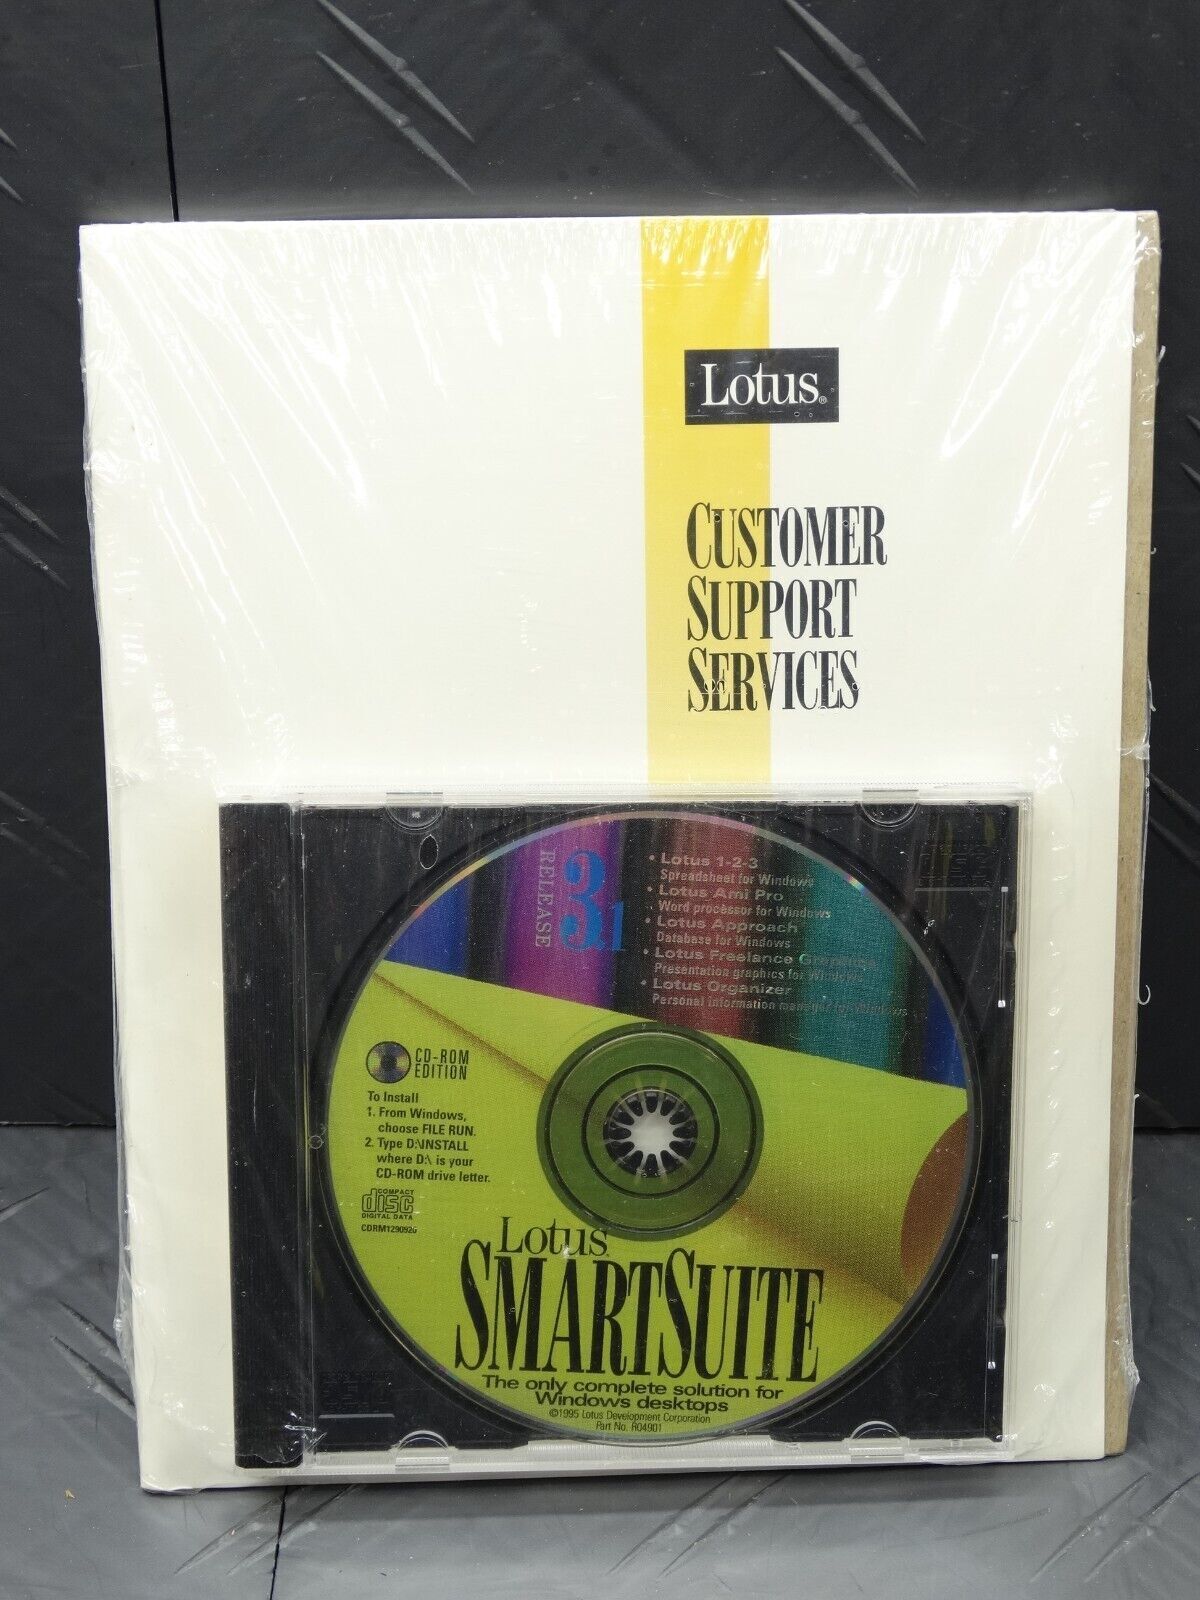 Lotus Smart Suite 1995 Software + Customer Support Services Manual Original Seal